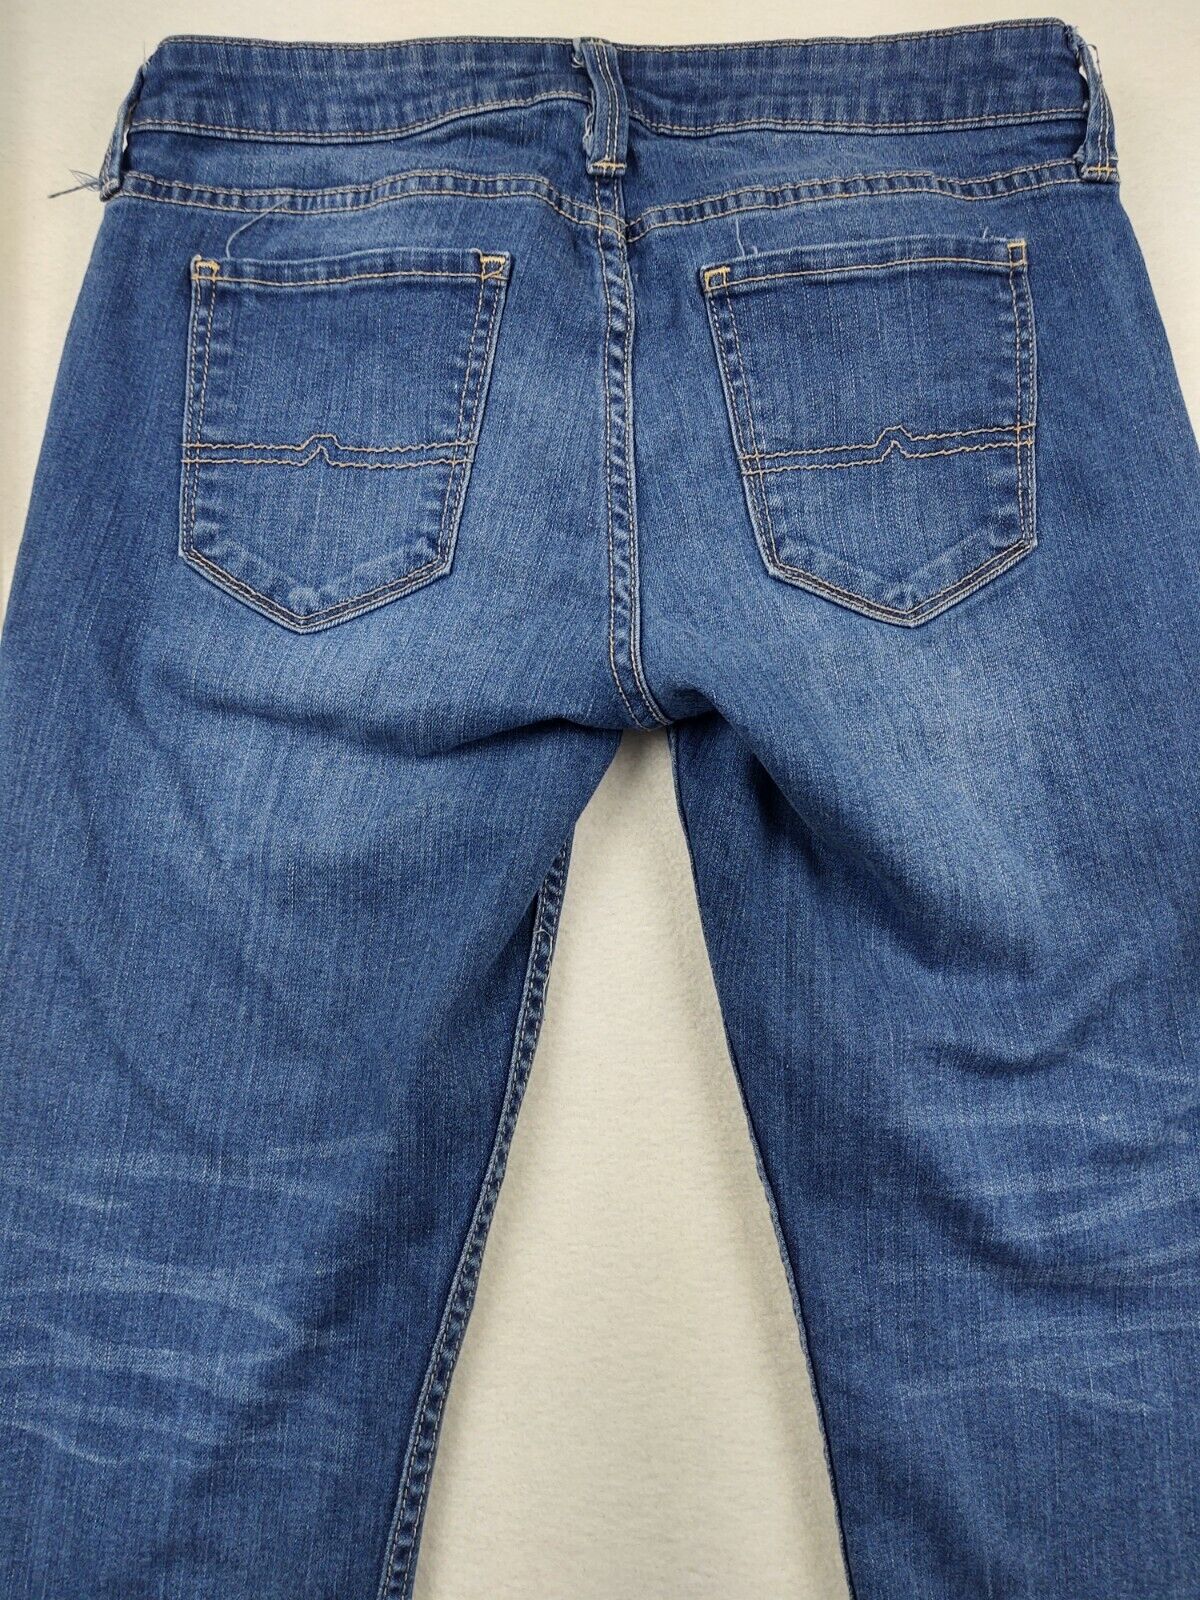 Arizona Jean Co. Juniors' Size 7 w27 Blue Denim Crop Capri Jeans